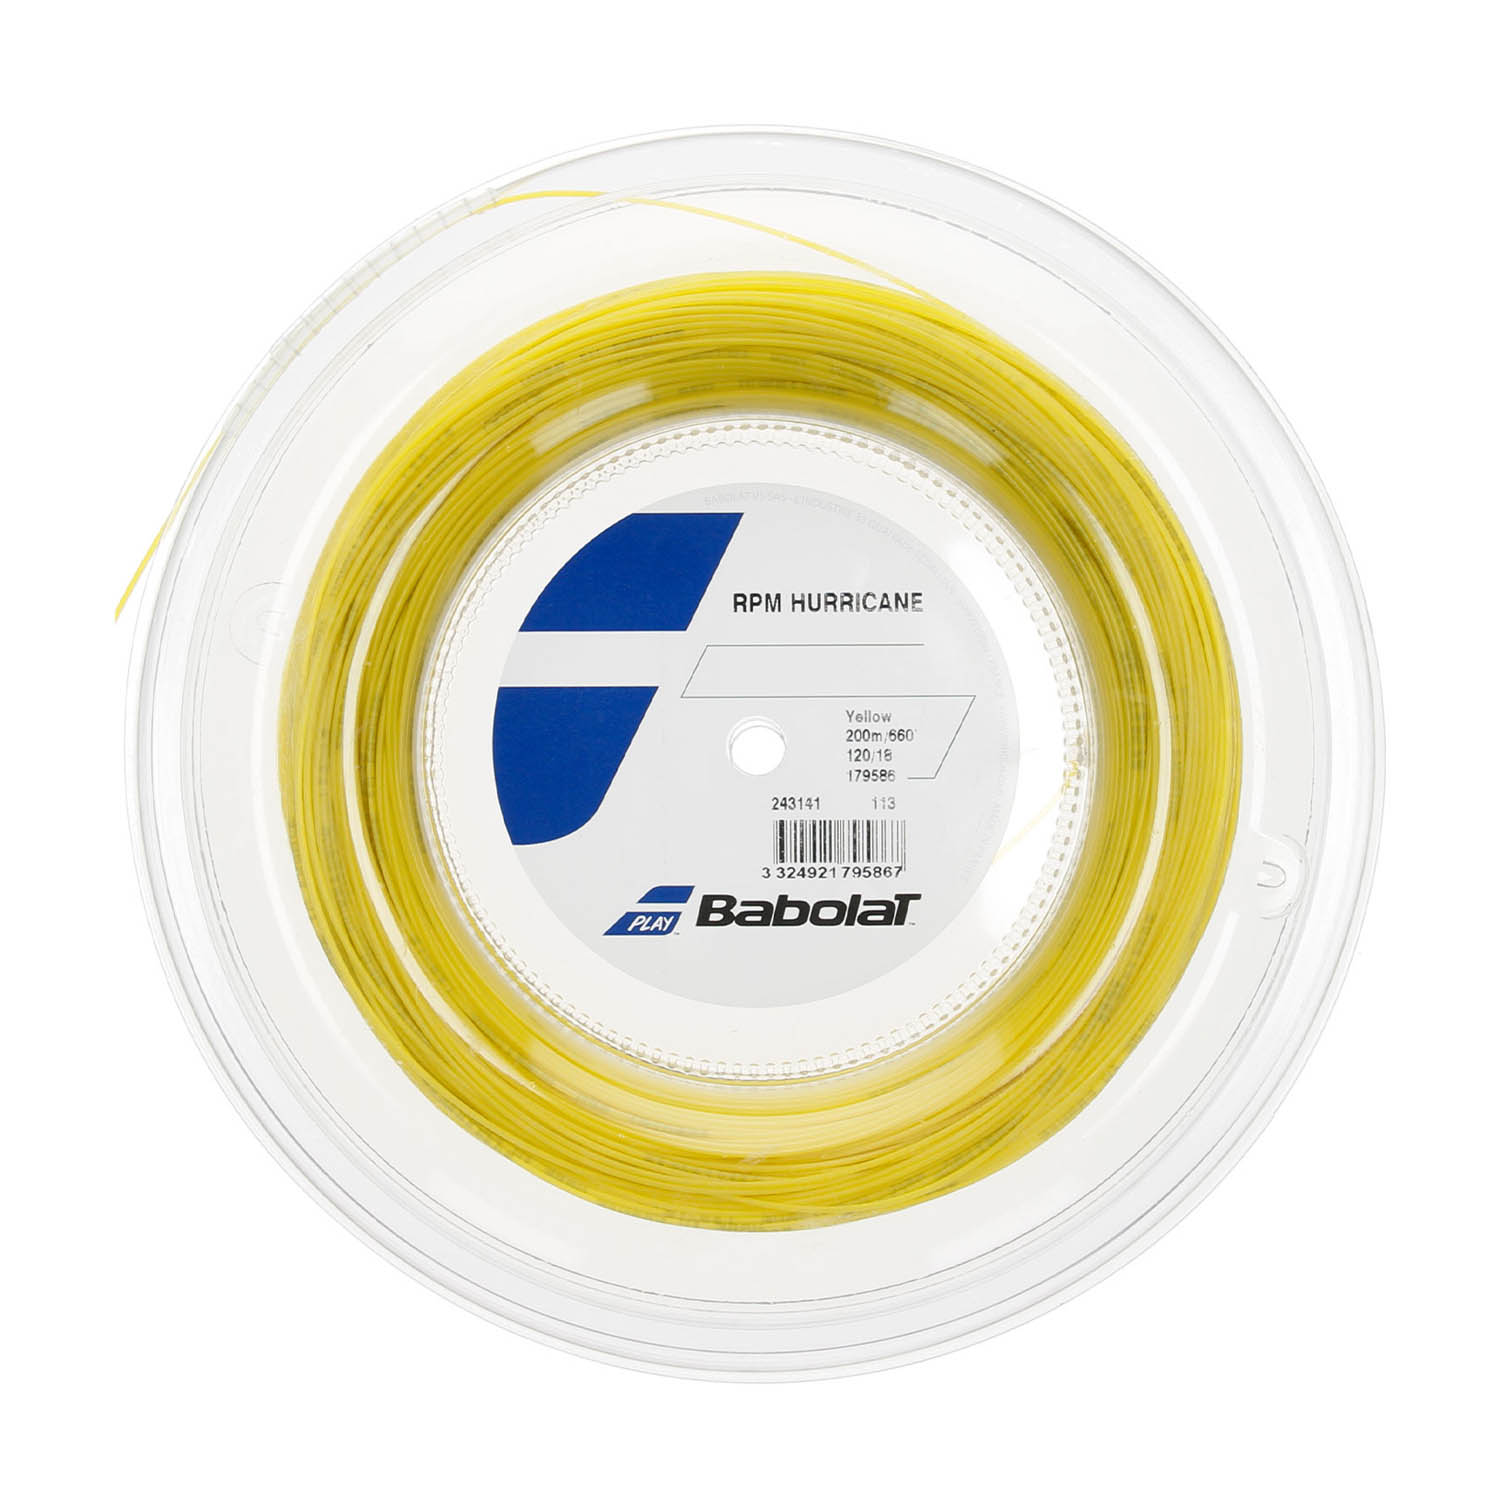 Babolat RPM Hurricane 1.20 200 m String Reel - Yellow